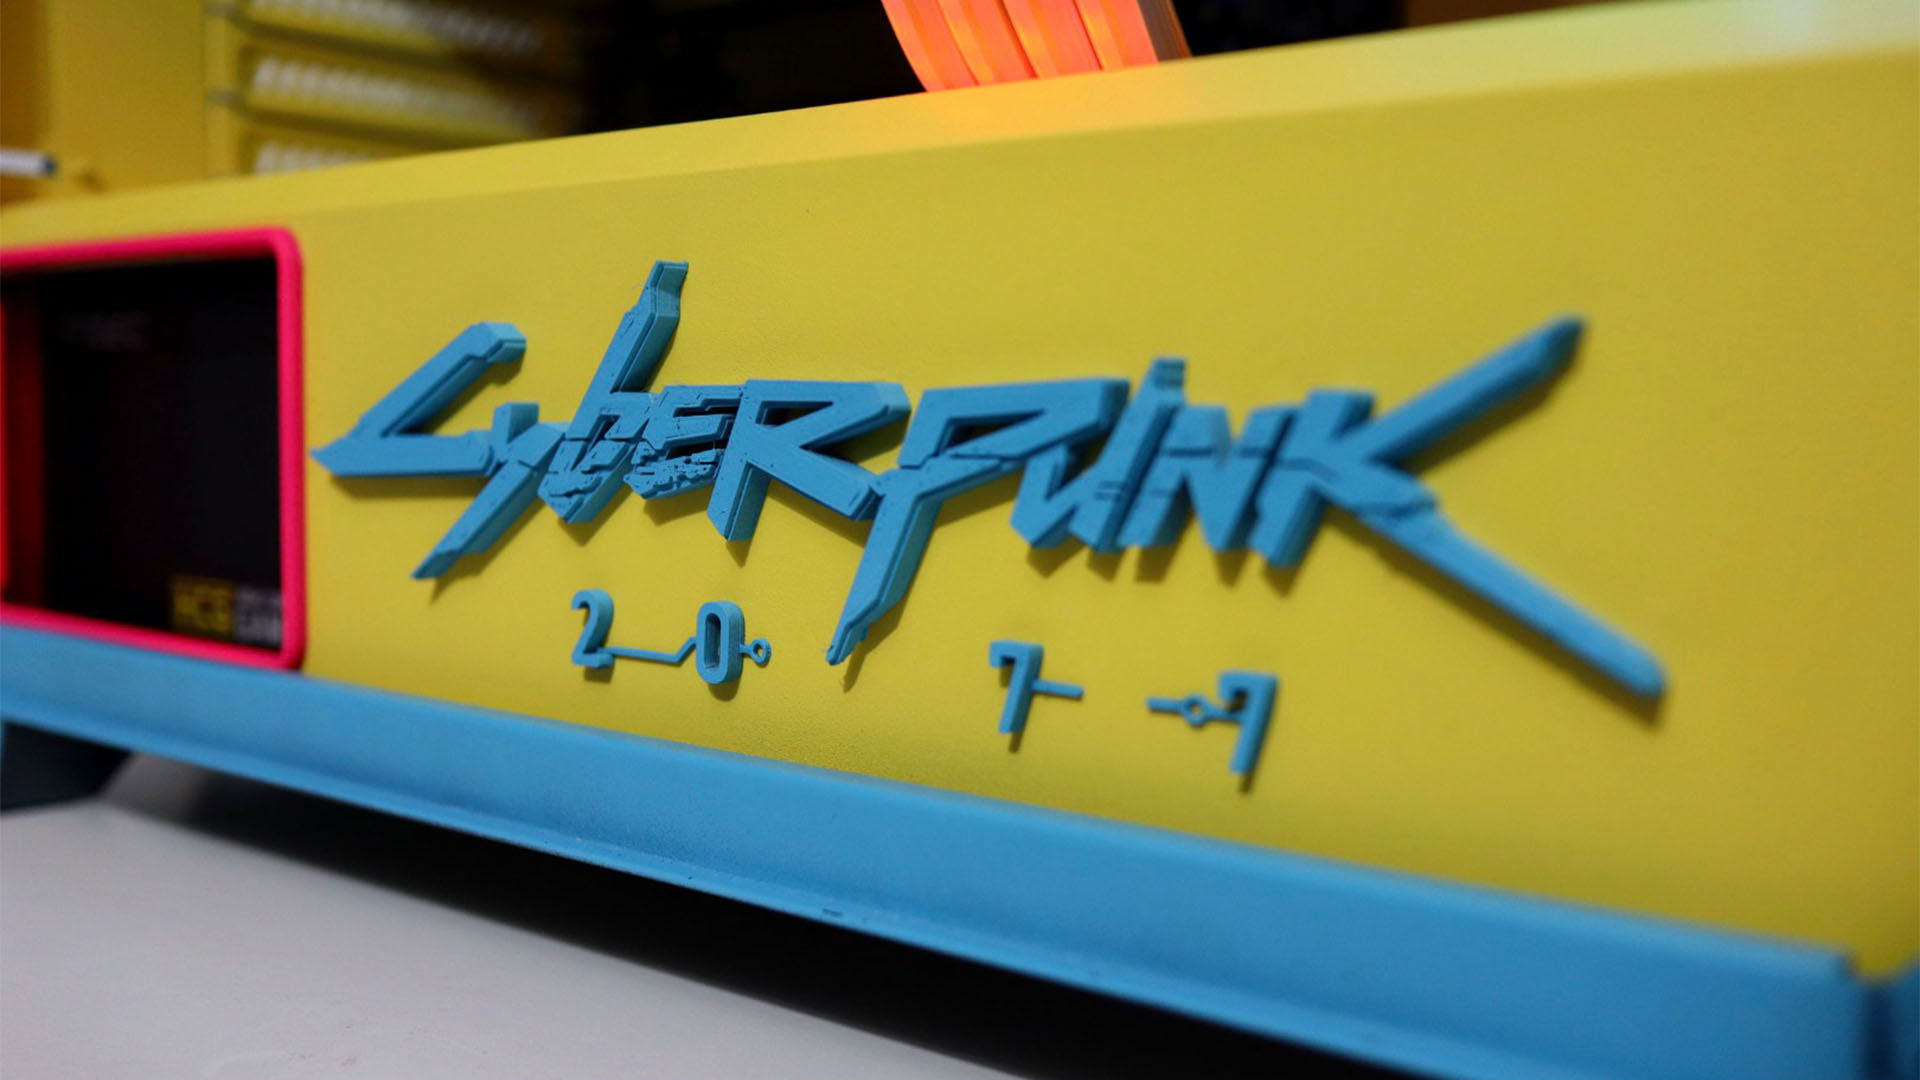 The logo on the PSU shroud inside the Cyberpunk 2077 gaming PC